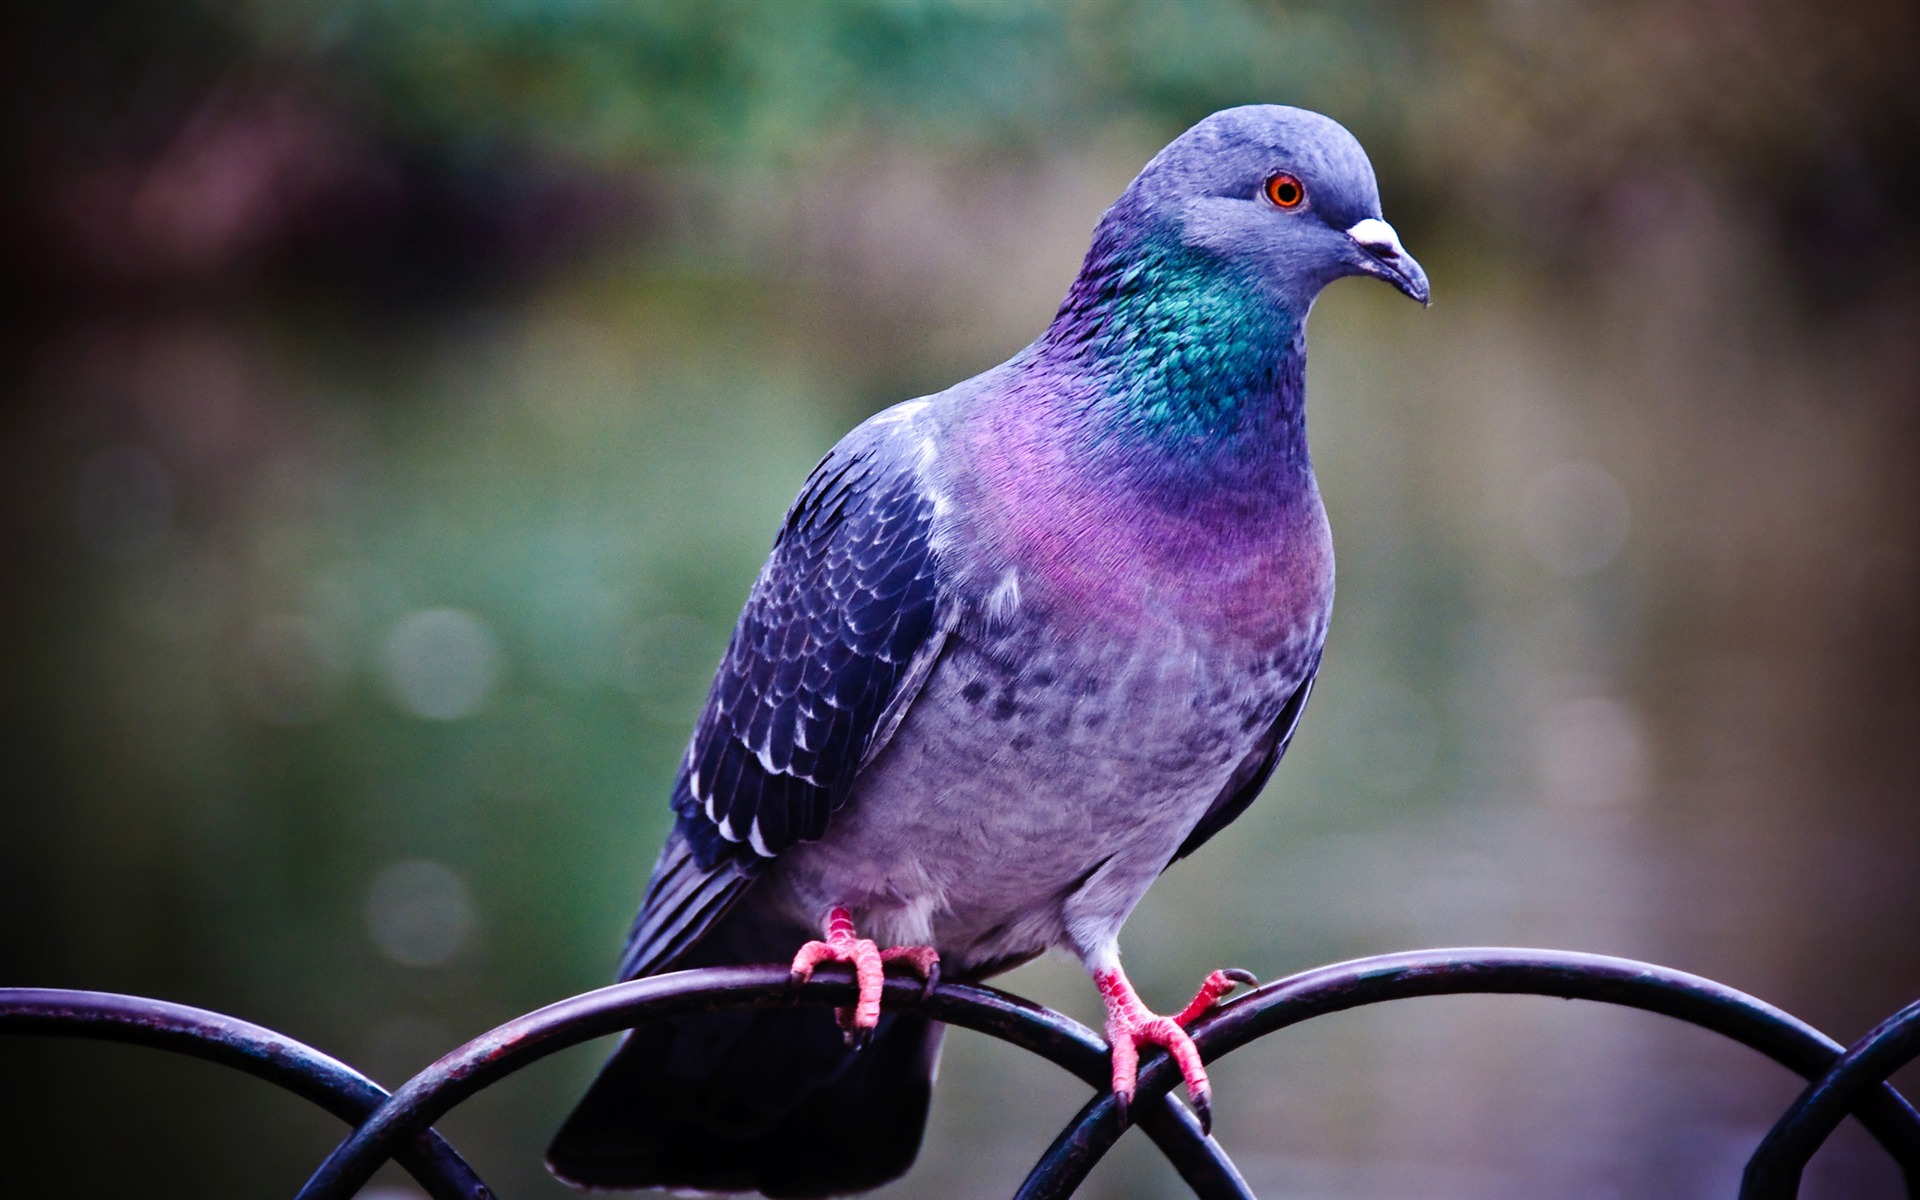 225074 descargar imagen aves, animales, paloma, ave: fondos de pantalla y protectores de pantalla gratis